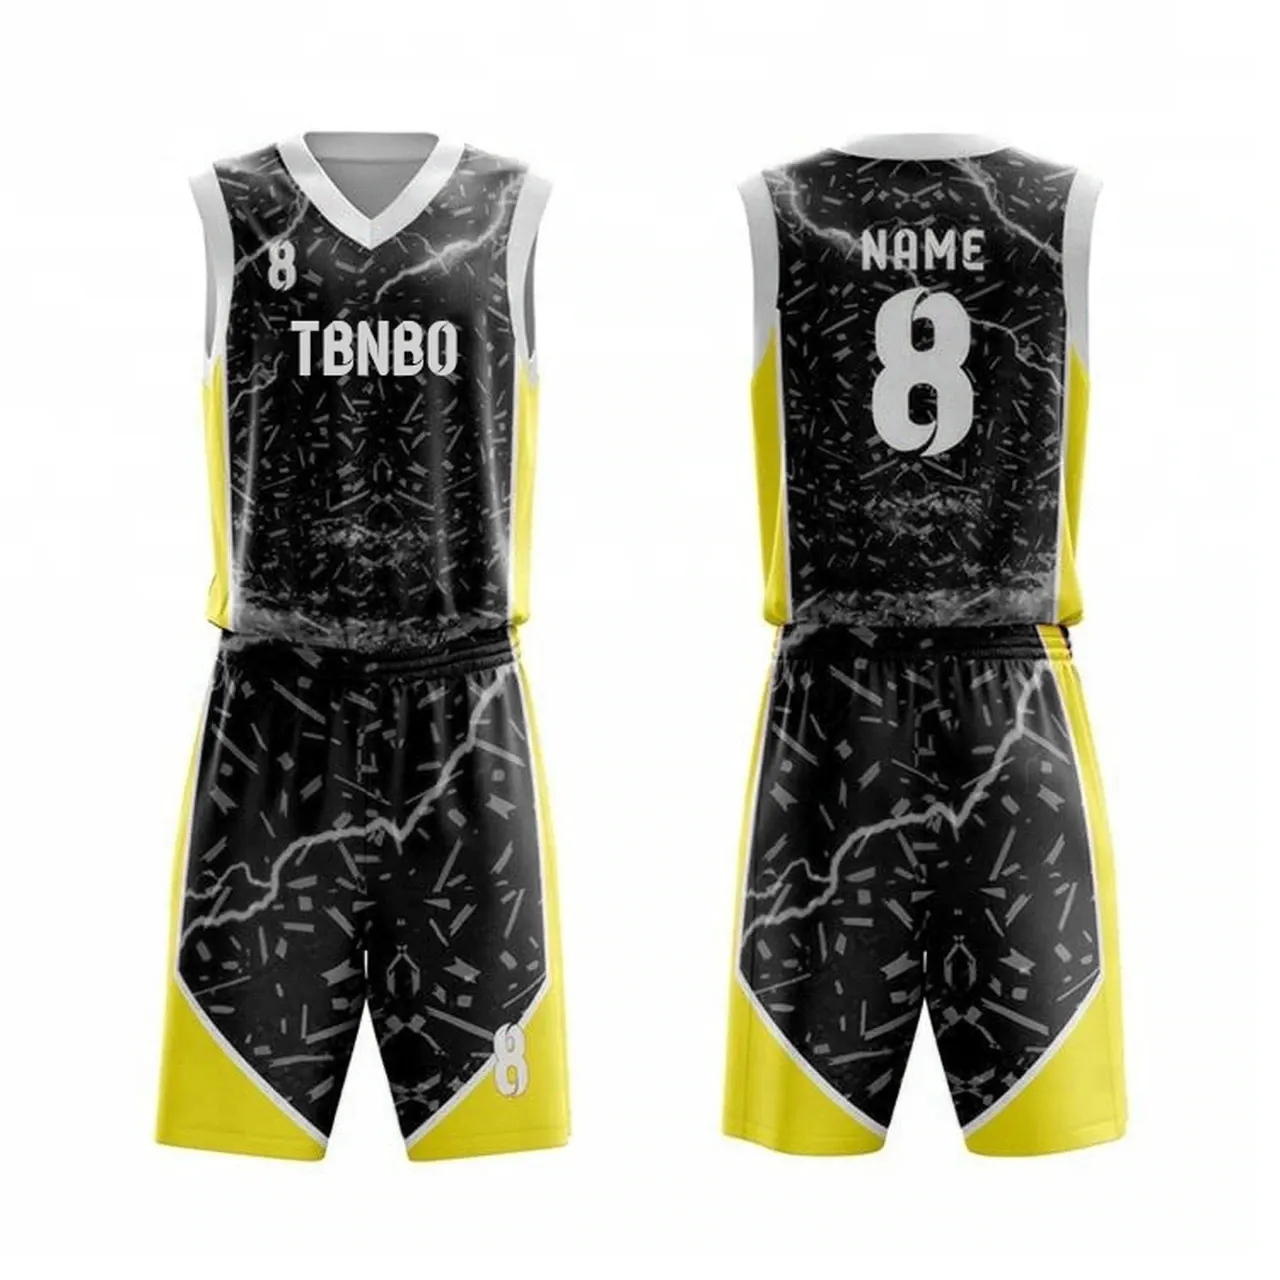 Unique Basketball Jersey Pattern Design Full Sublimation Digital Printing Oem Service Basketball Uniform